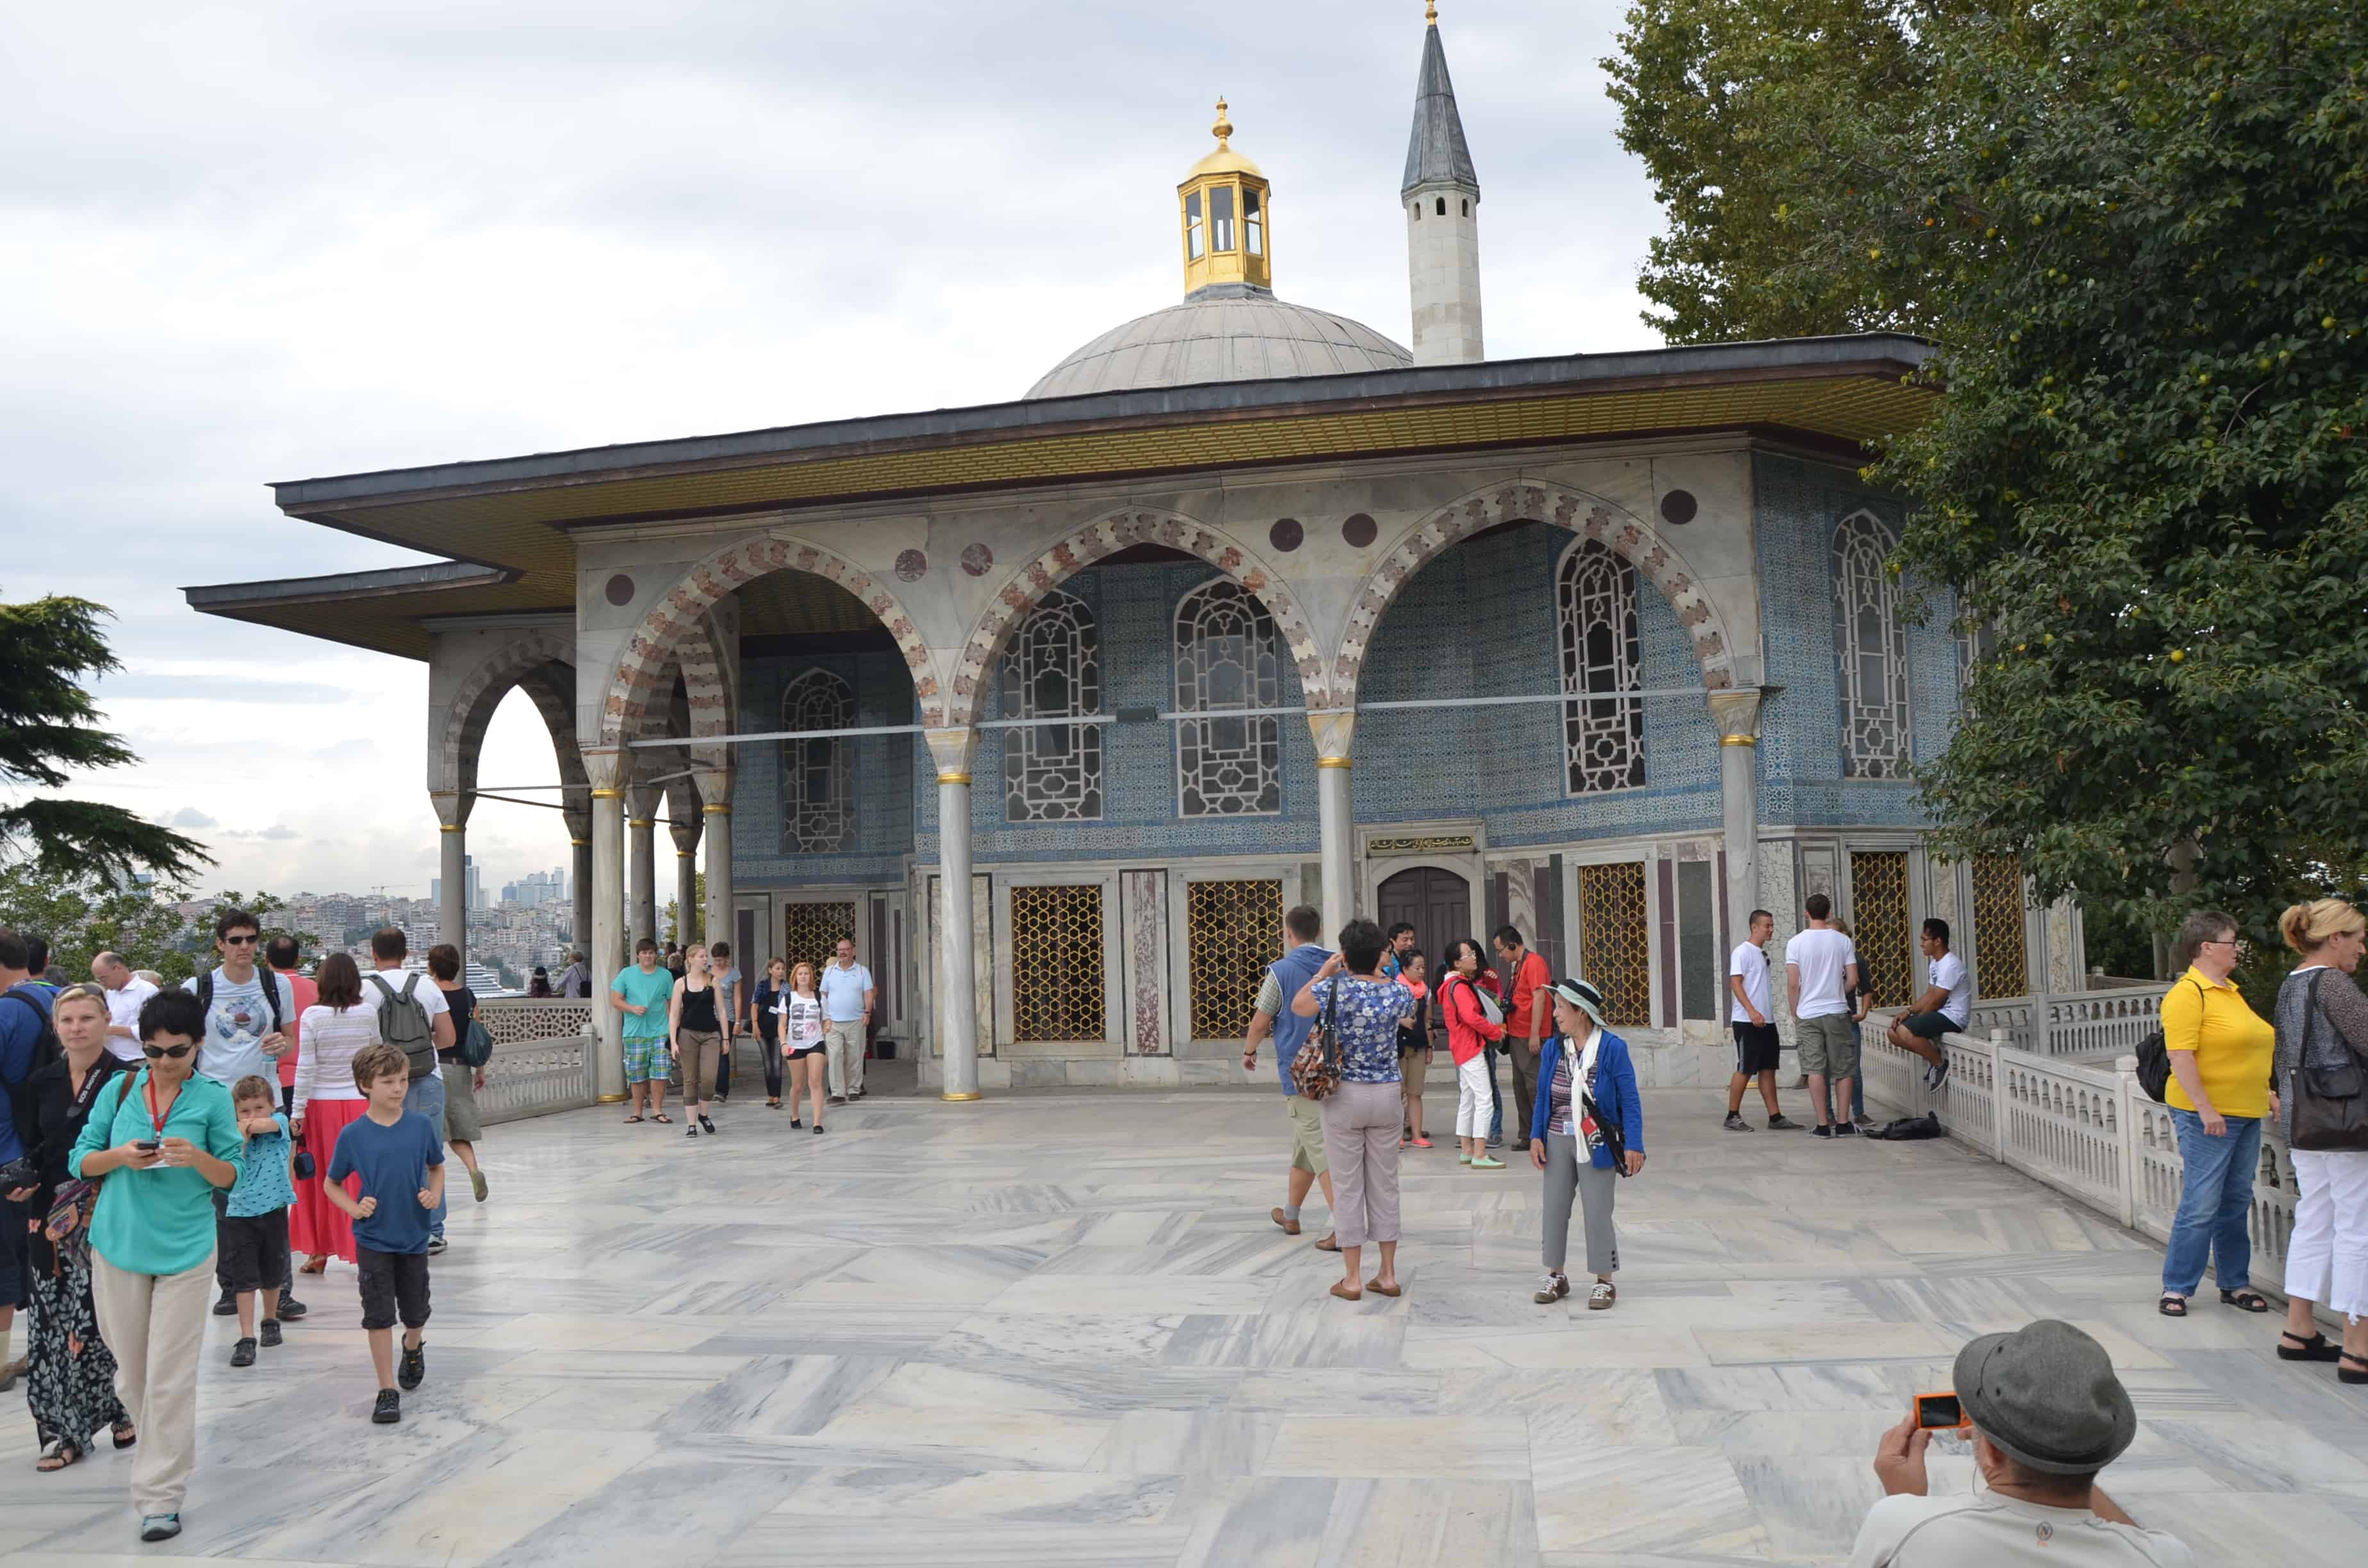 Baghdad Pavilion at Topkapi Palace in Istanbul, Turkey